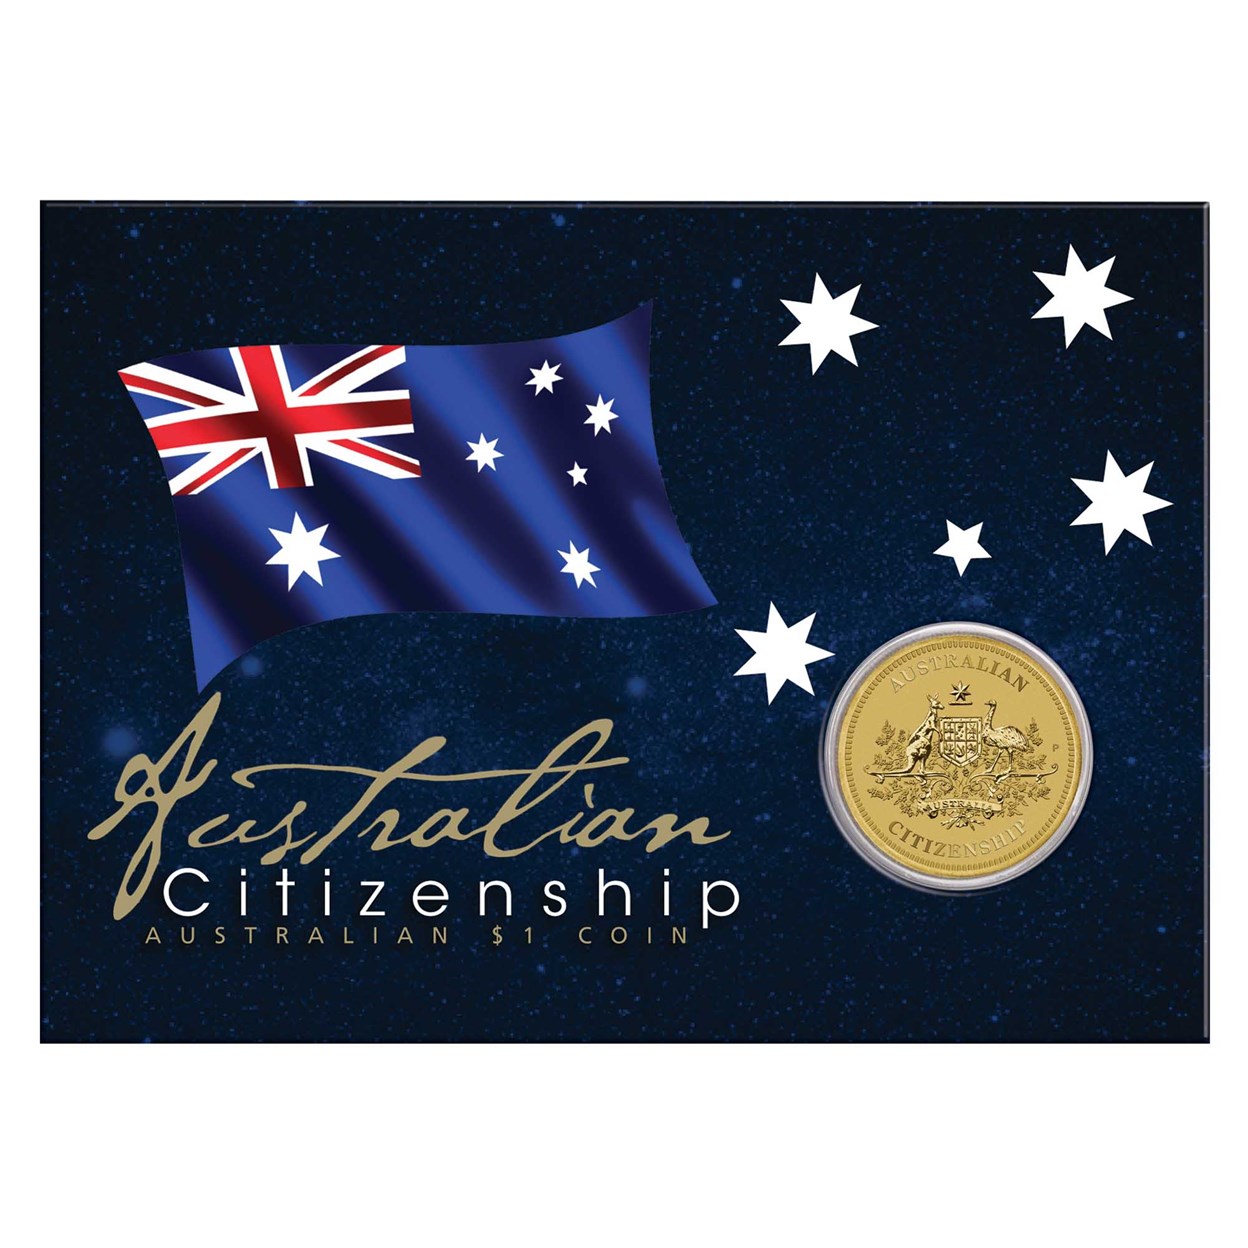 03 australian citizenship 2018 $1 coin InCard